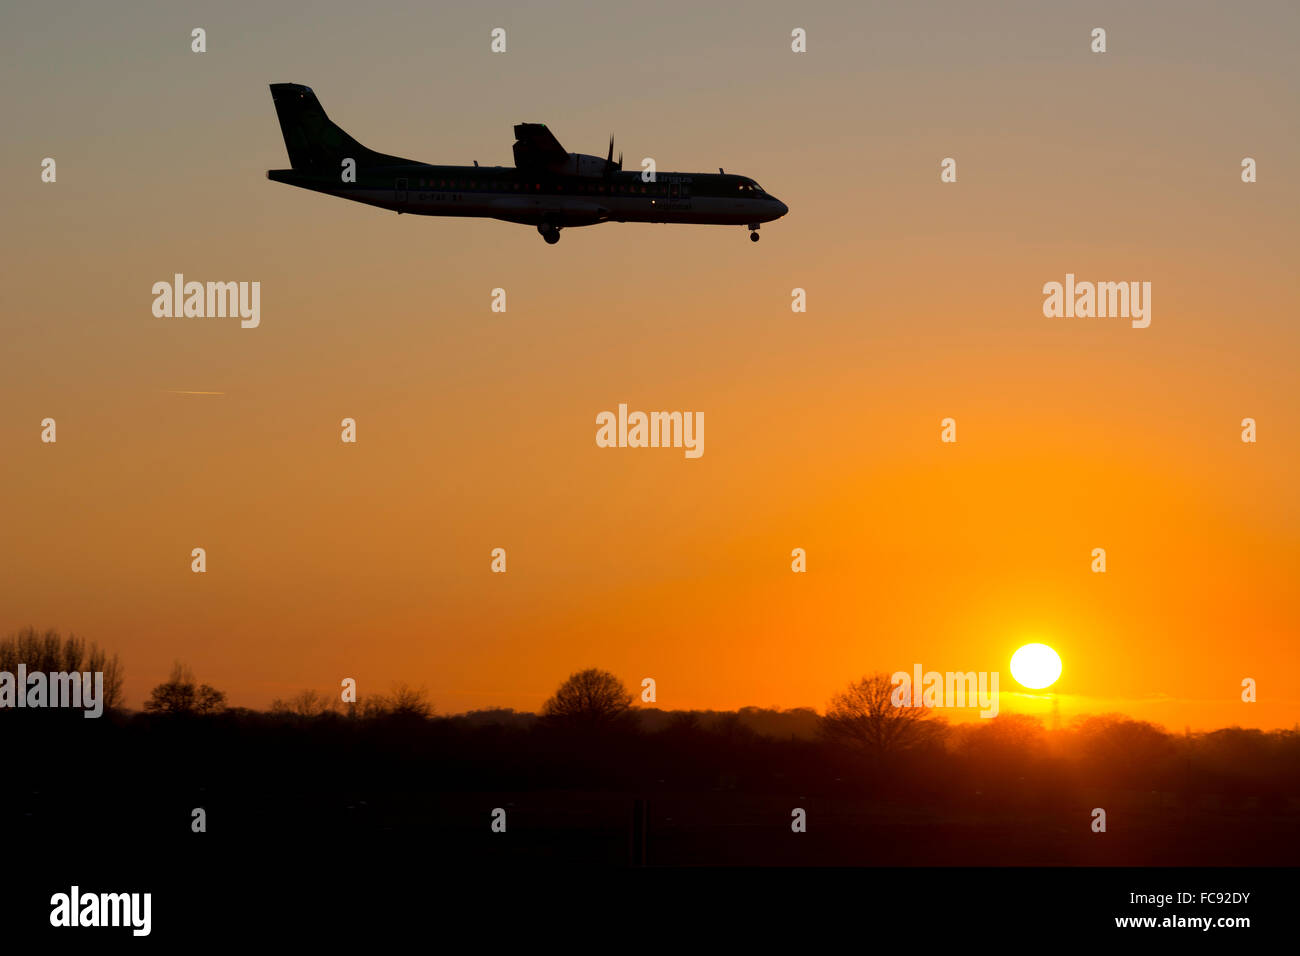 Aer Lingus Regional ATR-72 landing at sunset, Birmingham Airport, UK Stock Photo